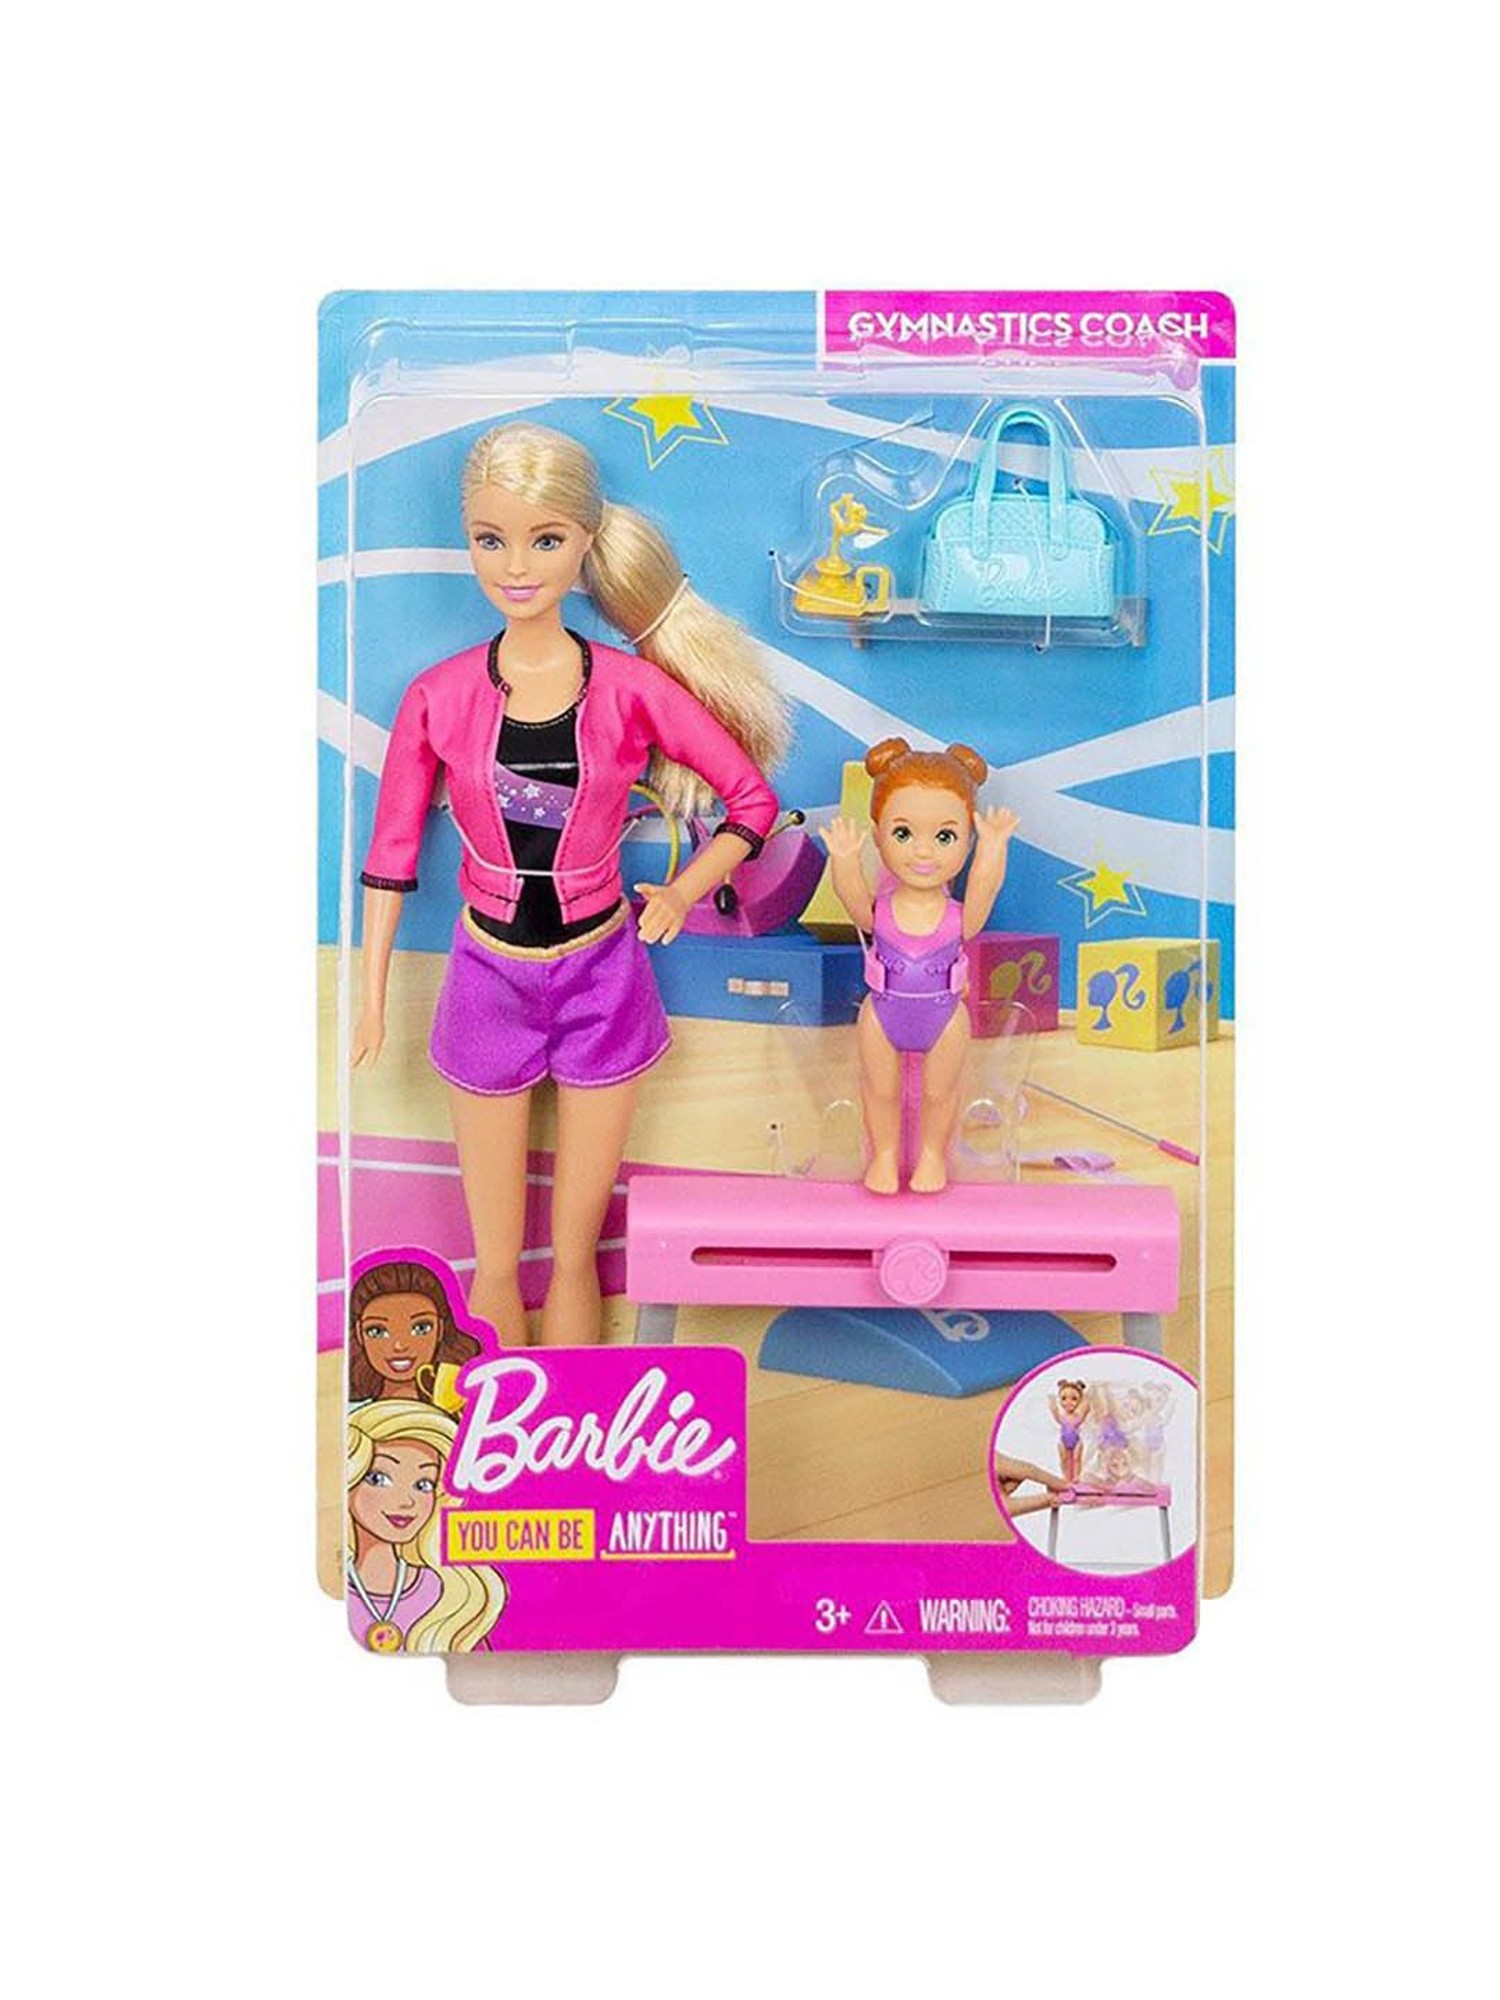 Barbie Gymnastics Coach Dolls \u0026 Playset. barbie doing gymnastics. 